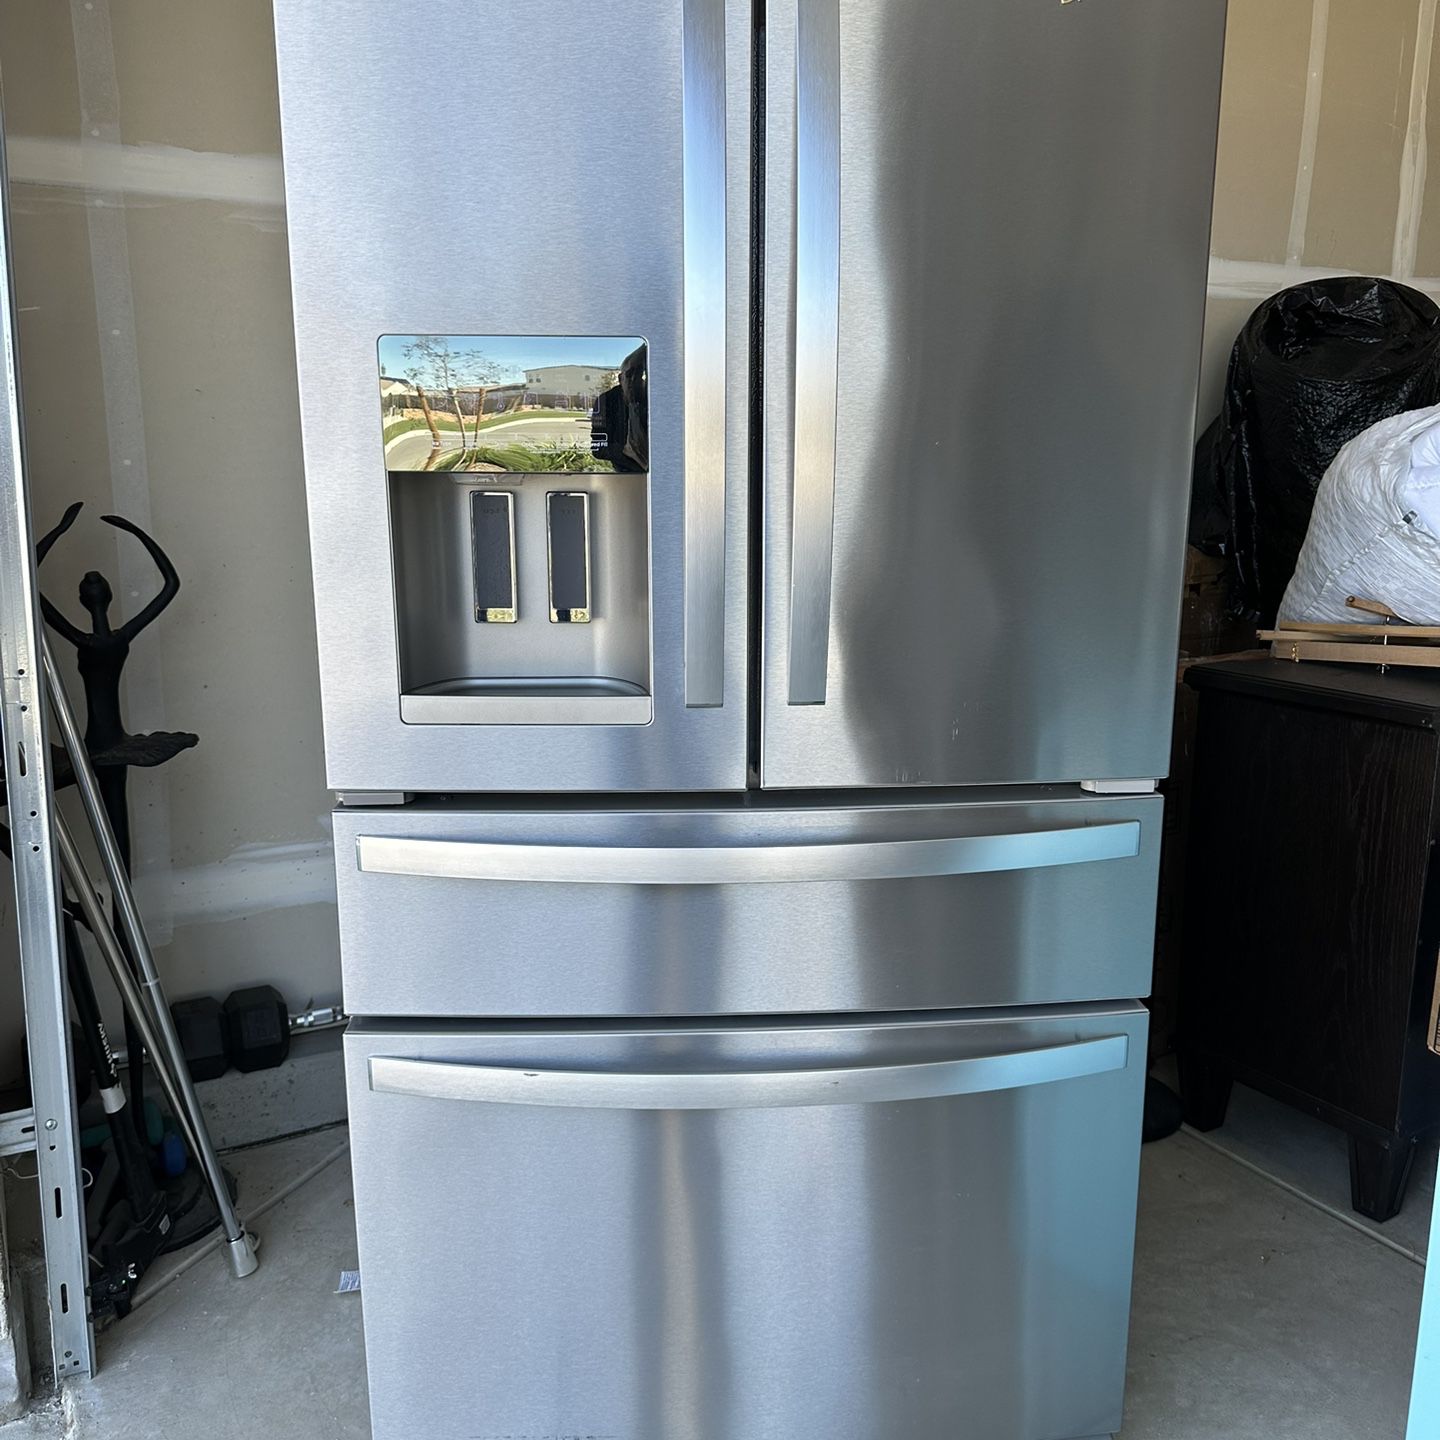 Whirlpool French Door Refrigerator 